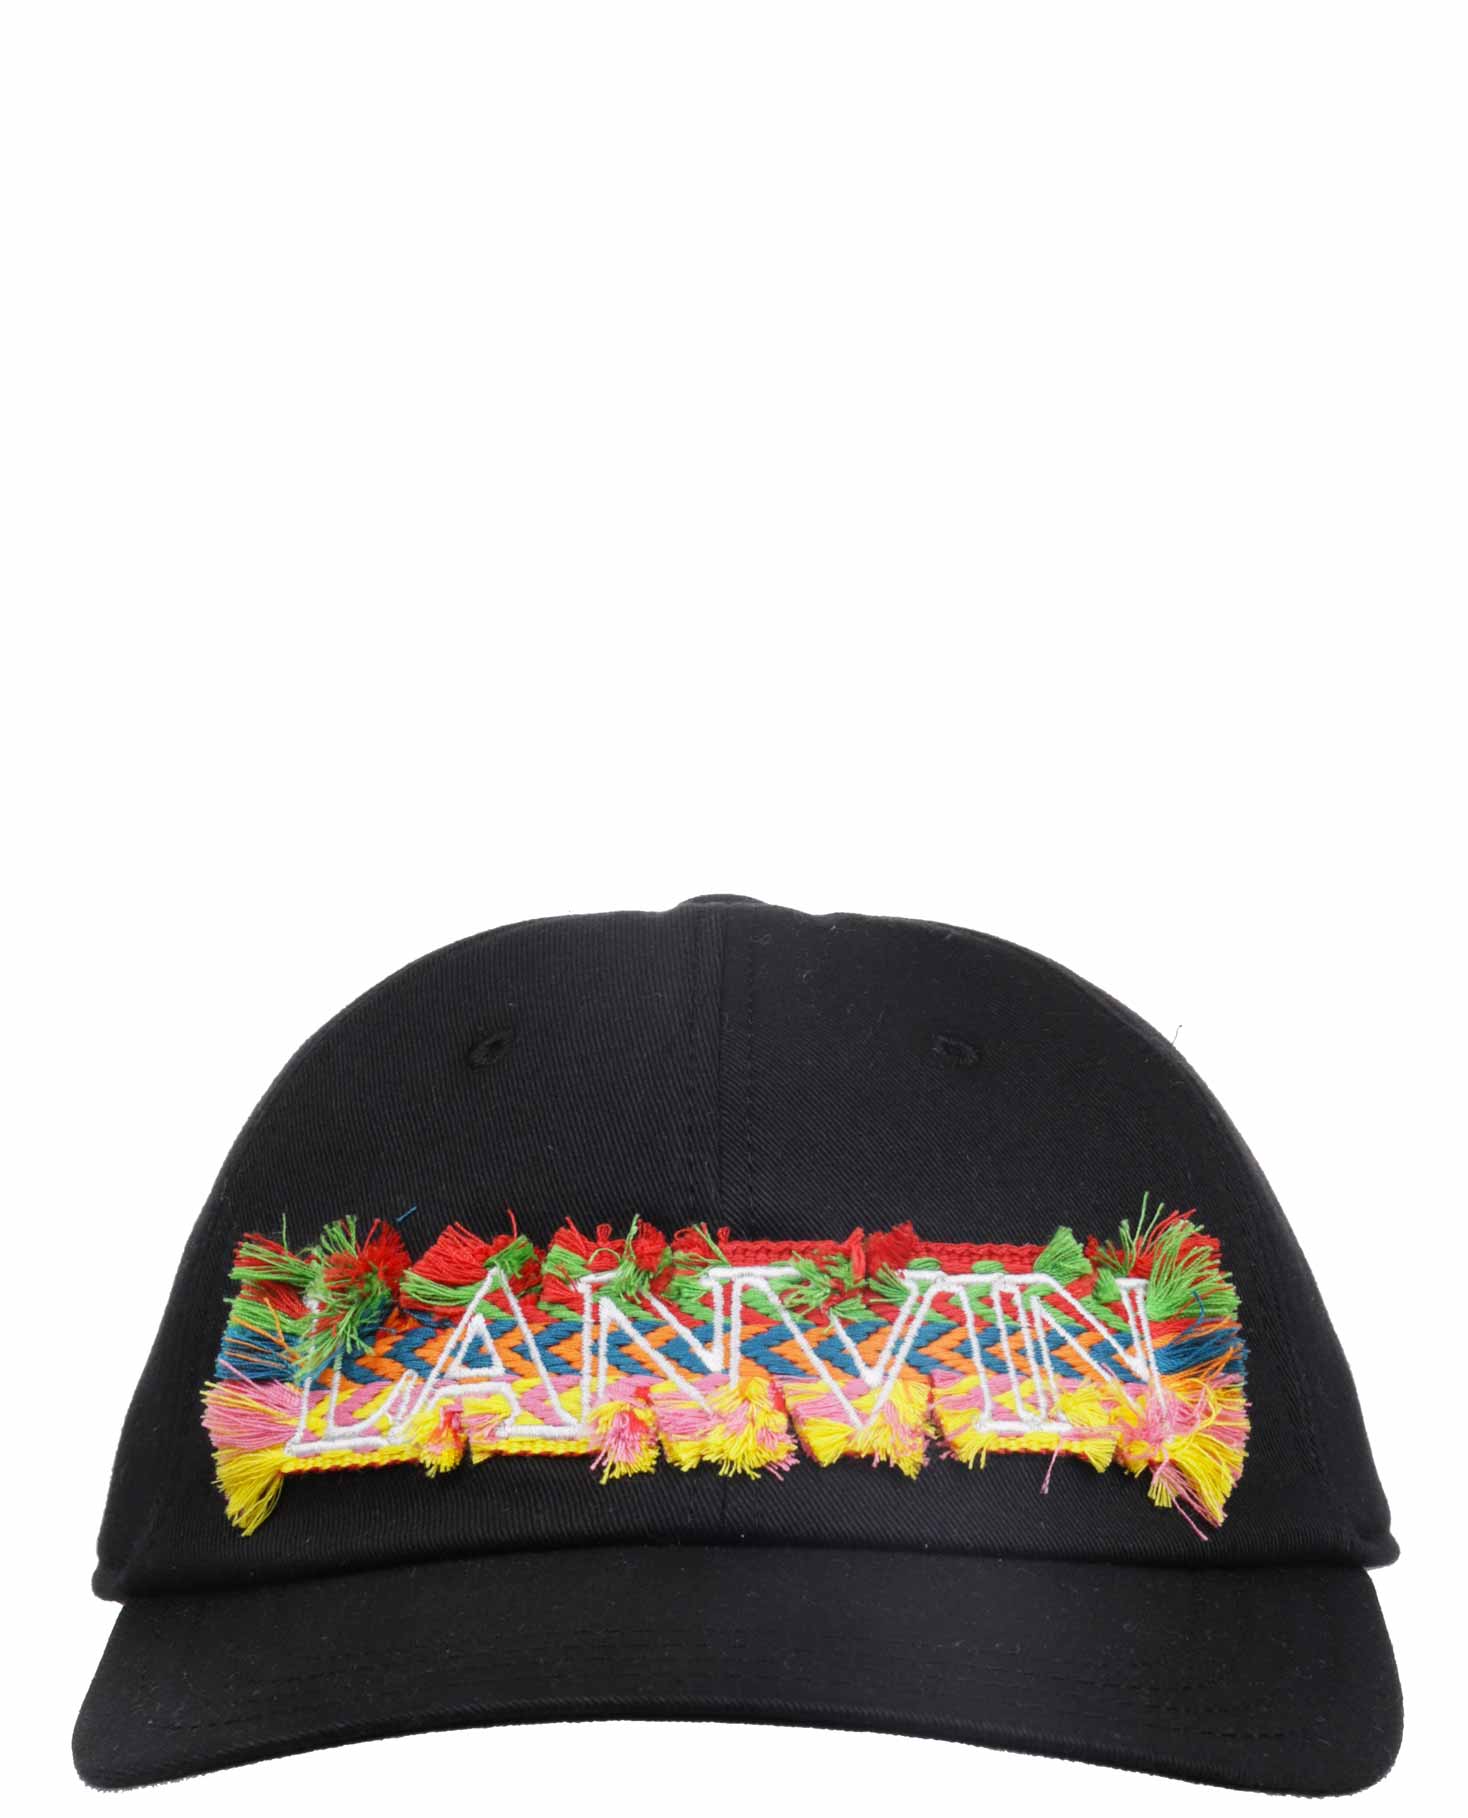 Lanvin Black Curb Hat